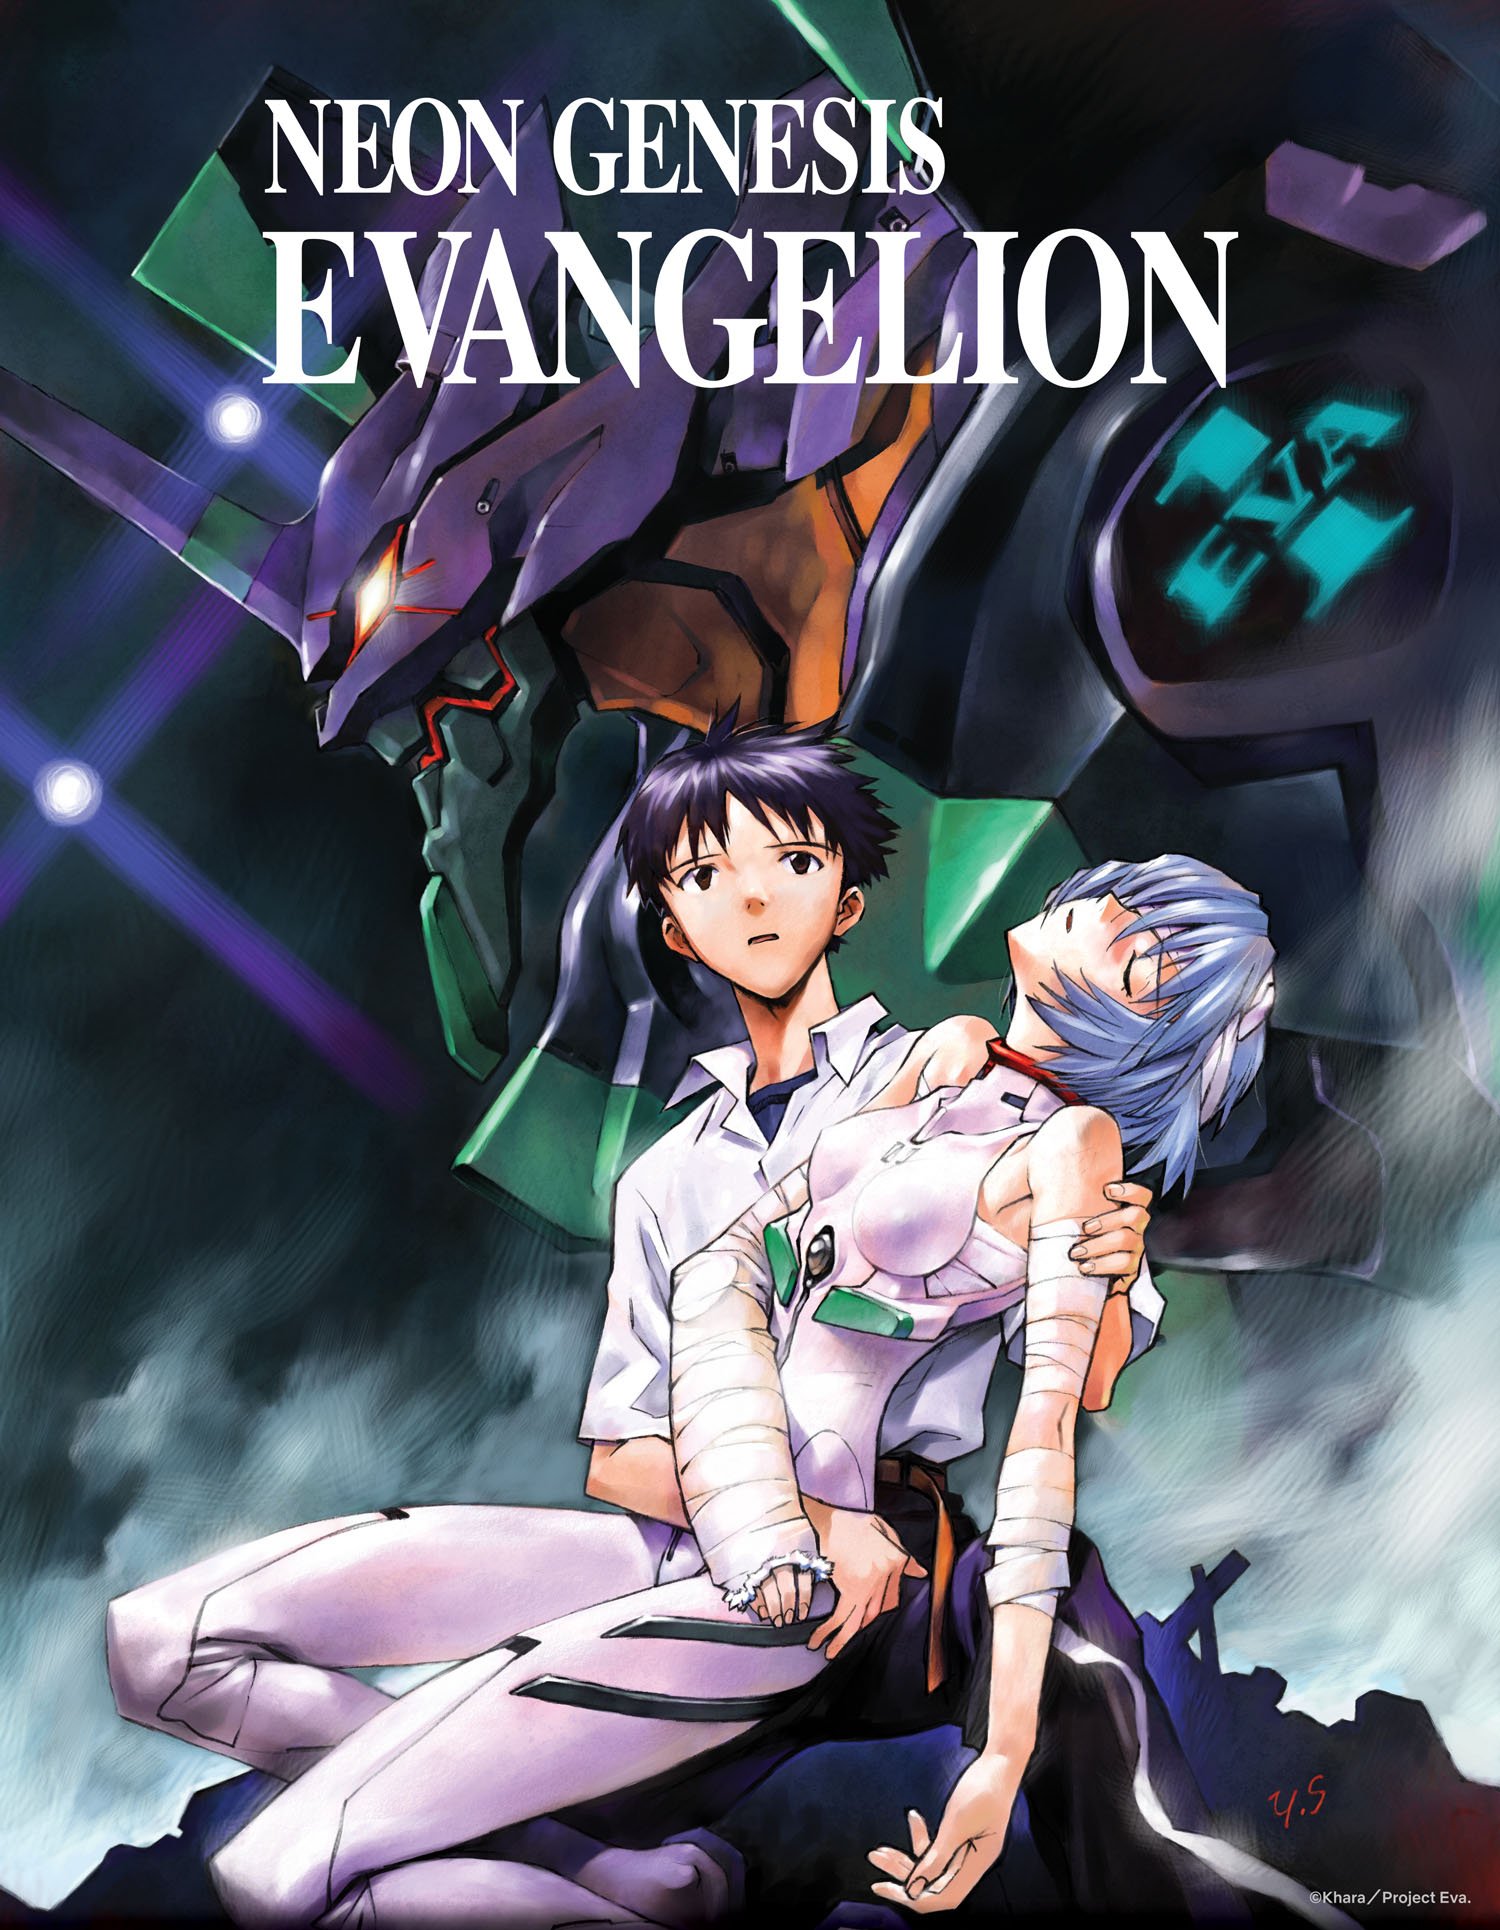 Neon Genesis Evangelion Evangelion Death True 2 And The End Of Evangelion Now Streaming On Netflix Anime Uk News